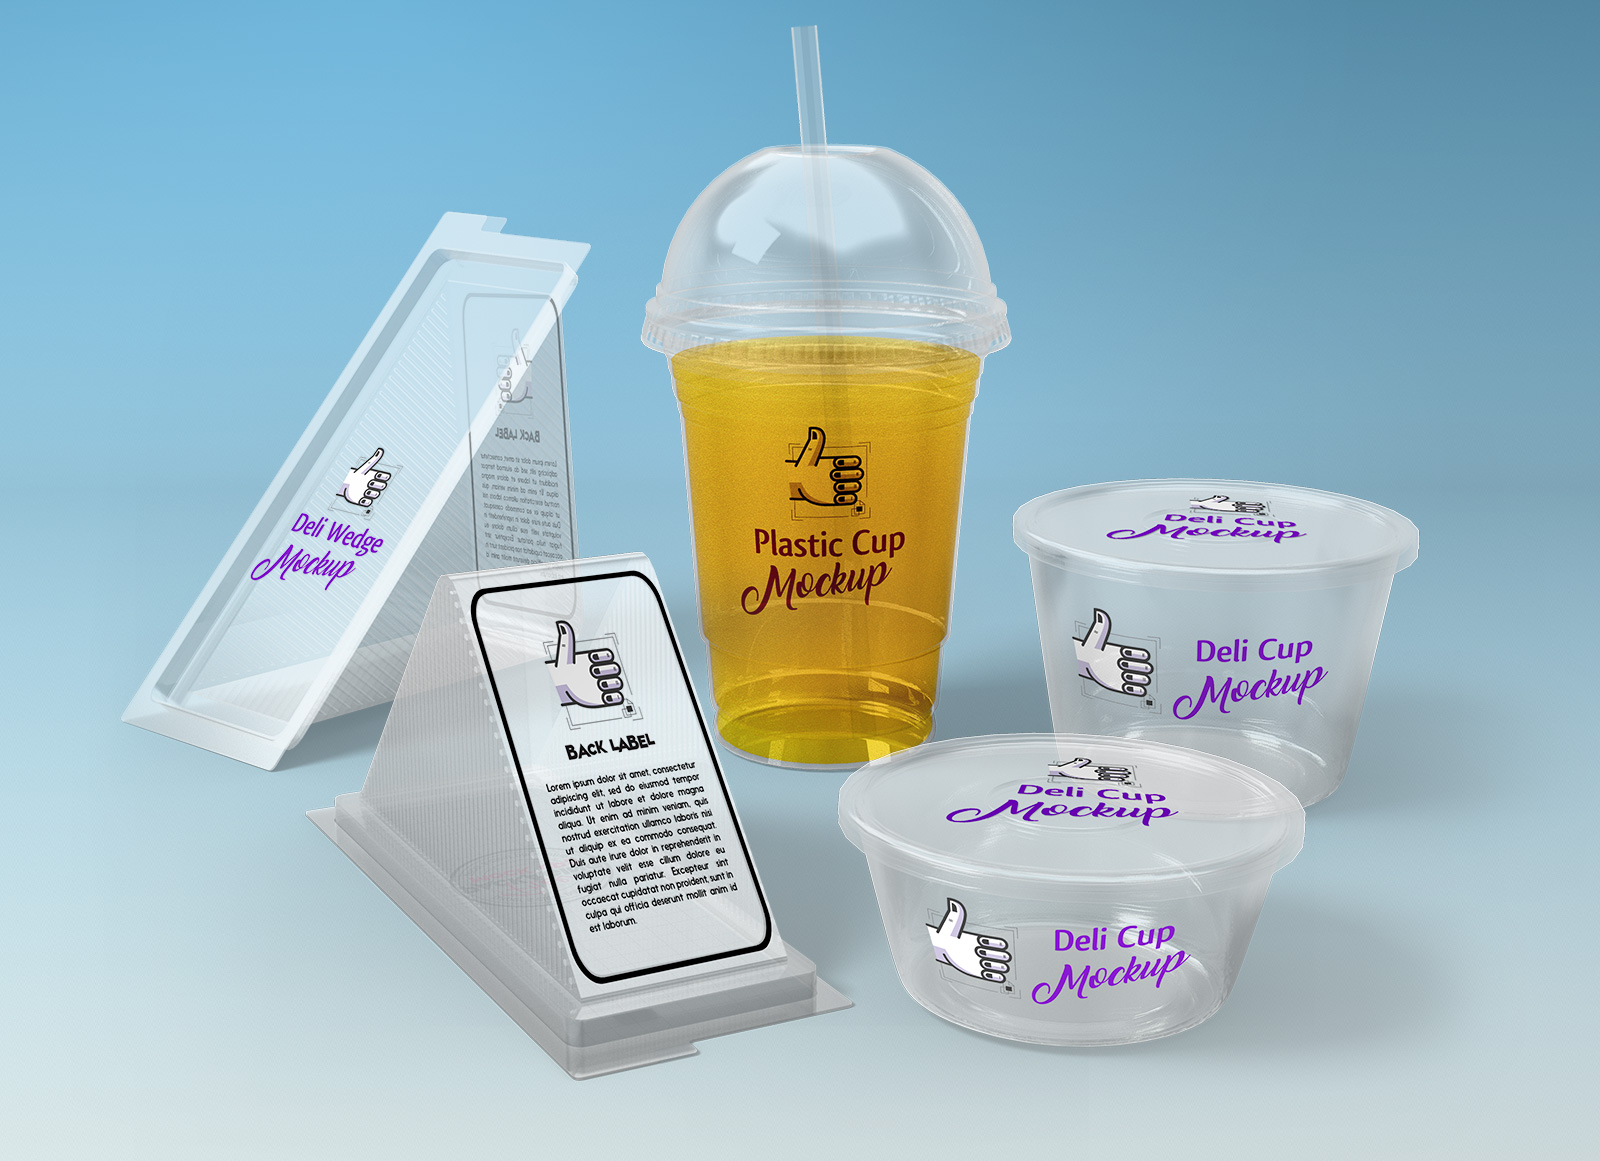 Free Sandwich, Food Box & Paper Cup Packaging Mockup PSD - Good Mockups